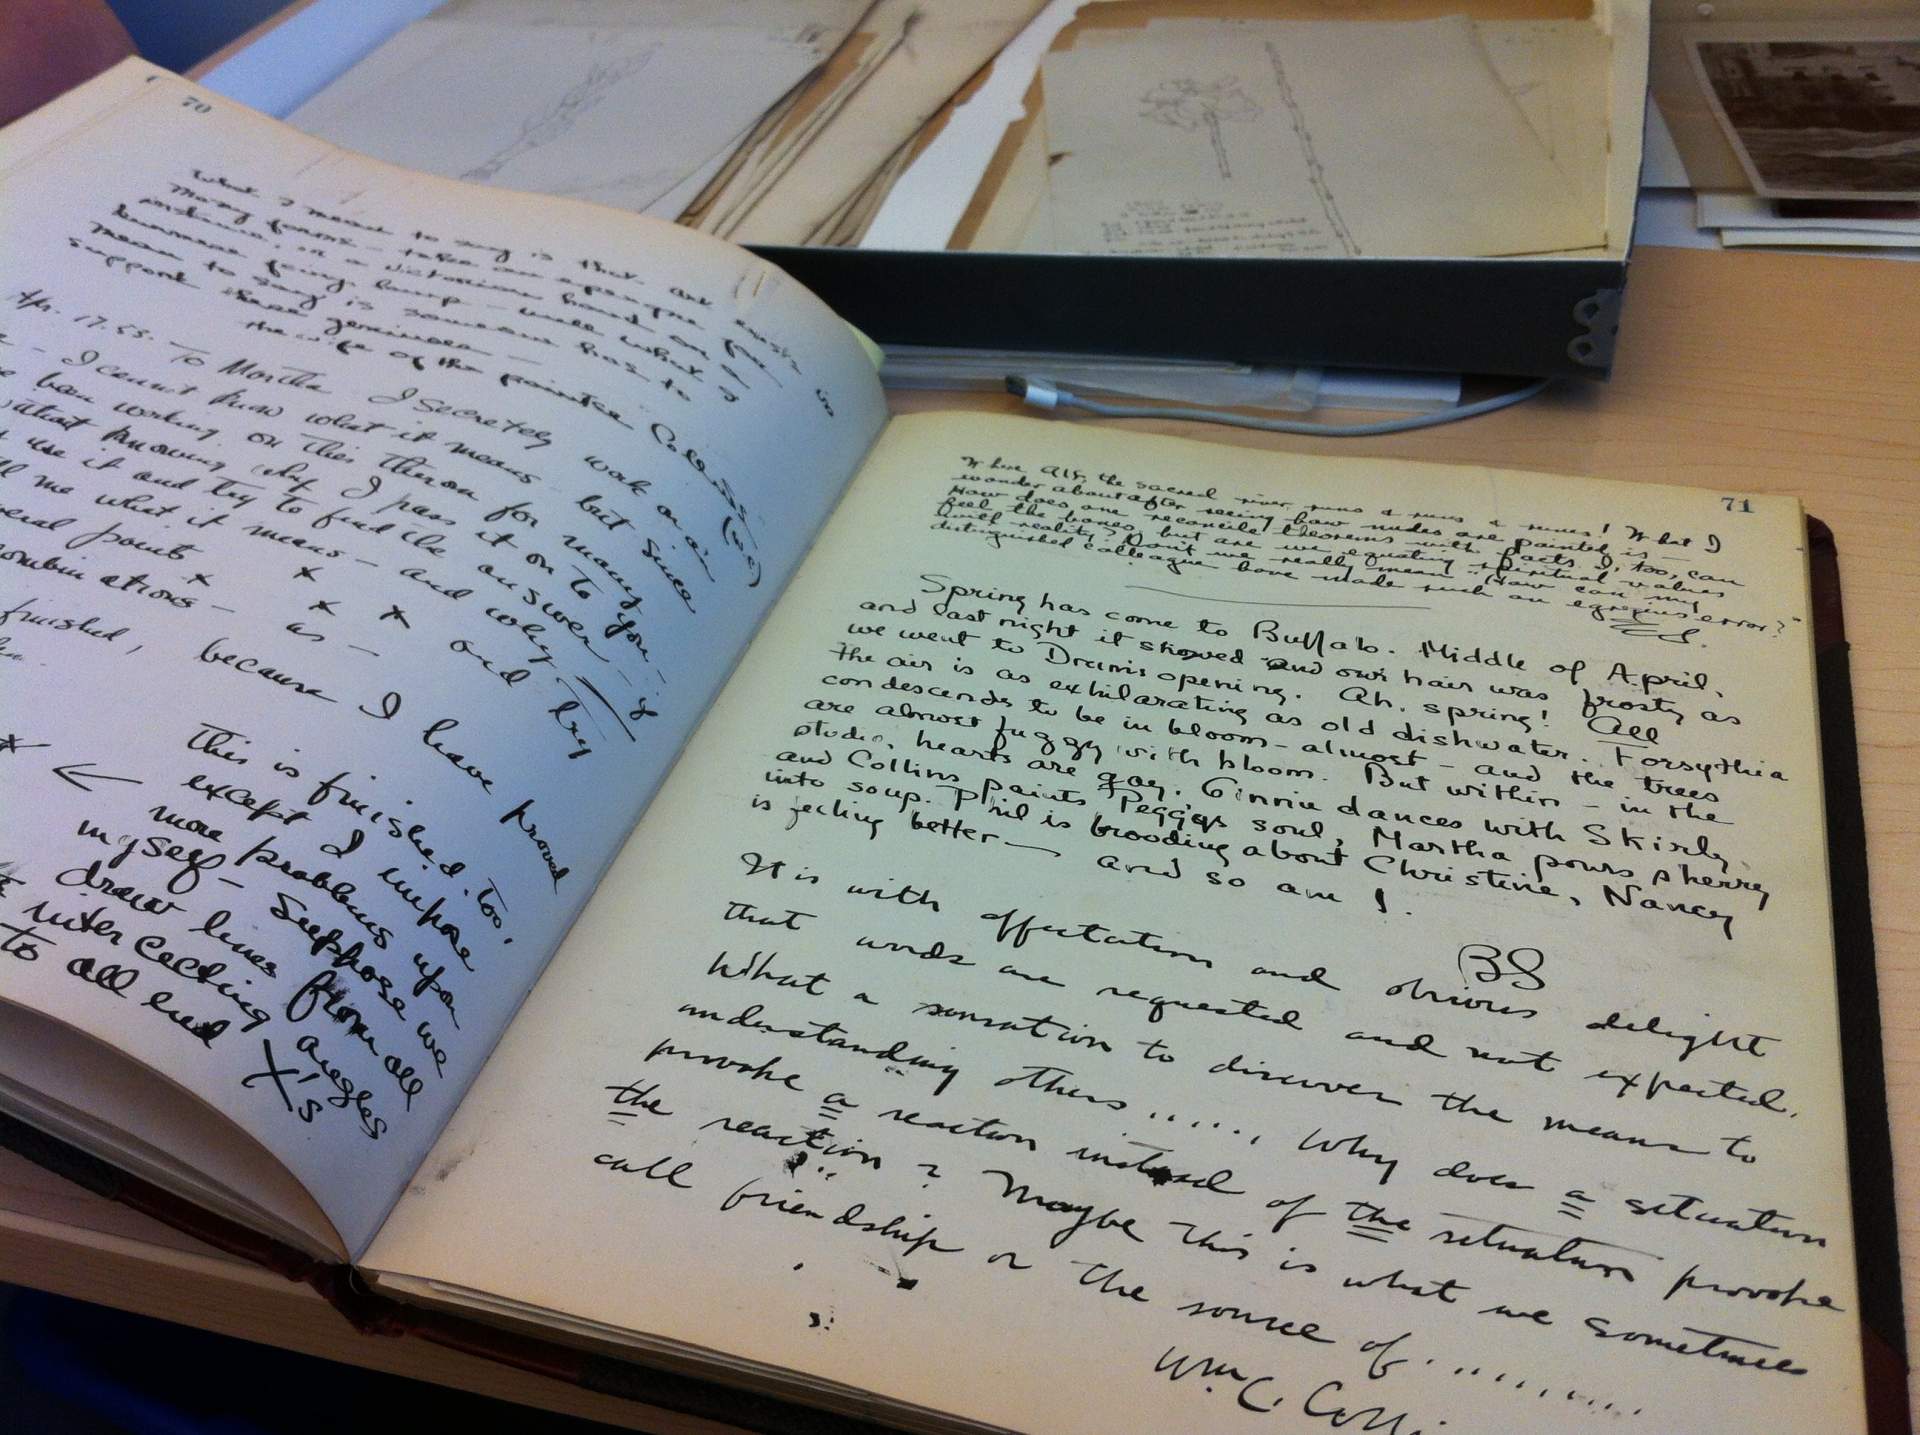 Martha Visser’t Hooft's Journals Inspire in the Burchfield Penney Archives